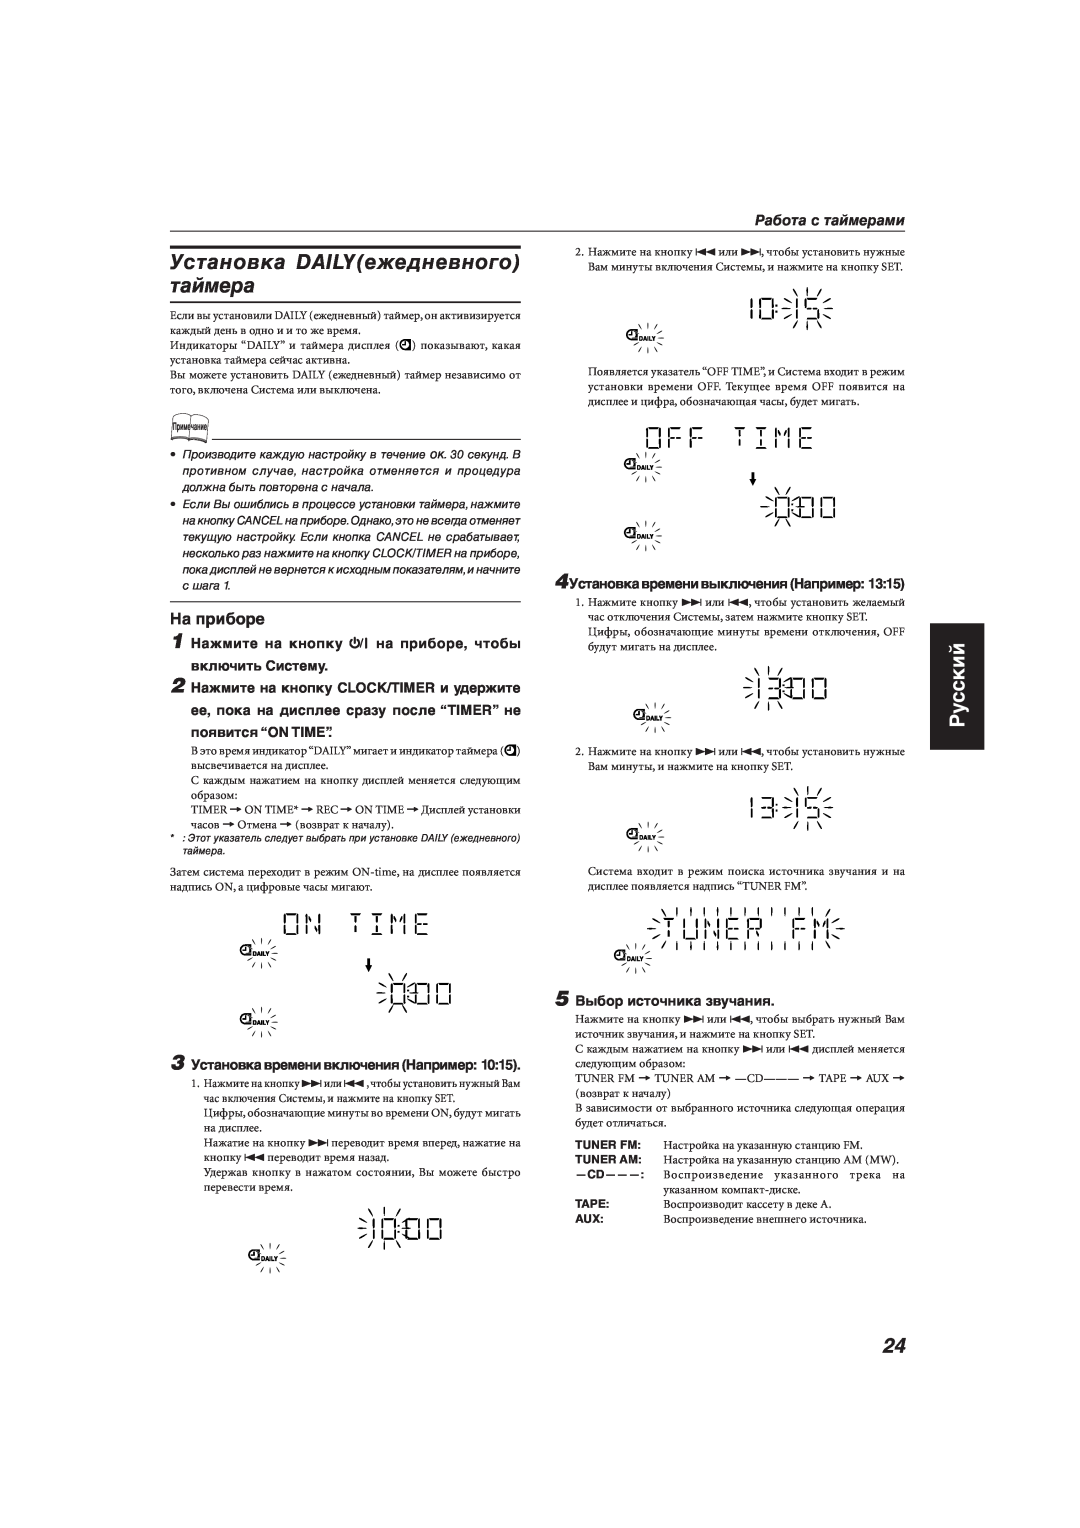 JVC MX-KA3 manual Установка DAILYежедневного таймера, Русский, Работа с таймерами, 4Установка времени выключения Например 